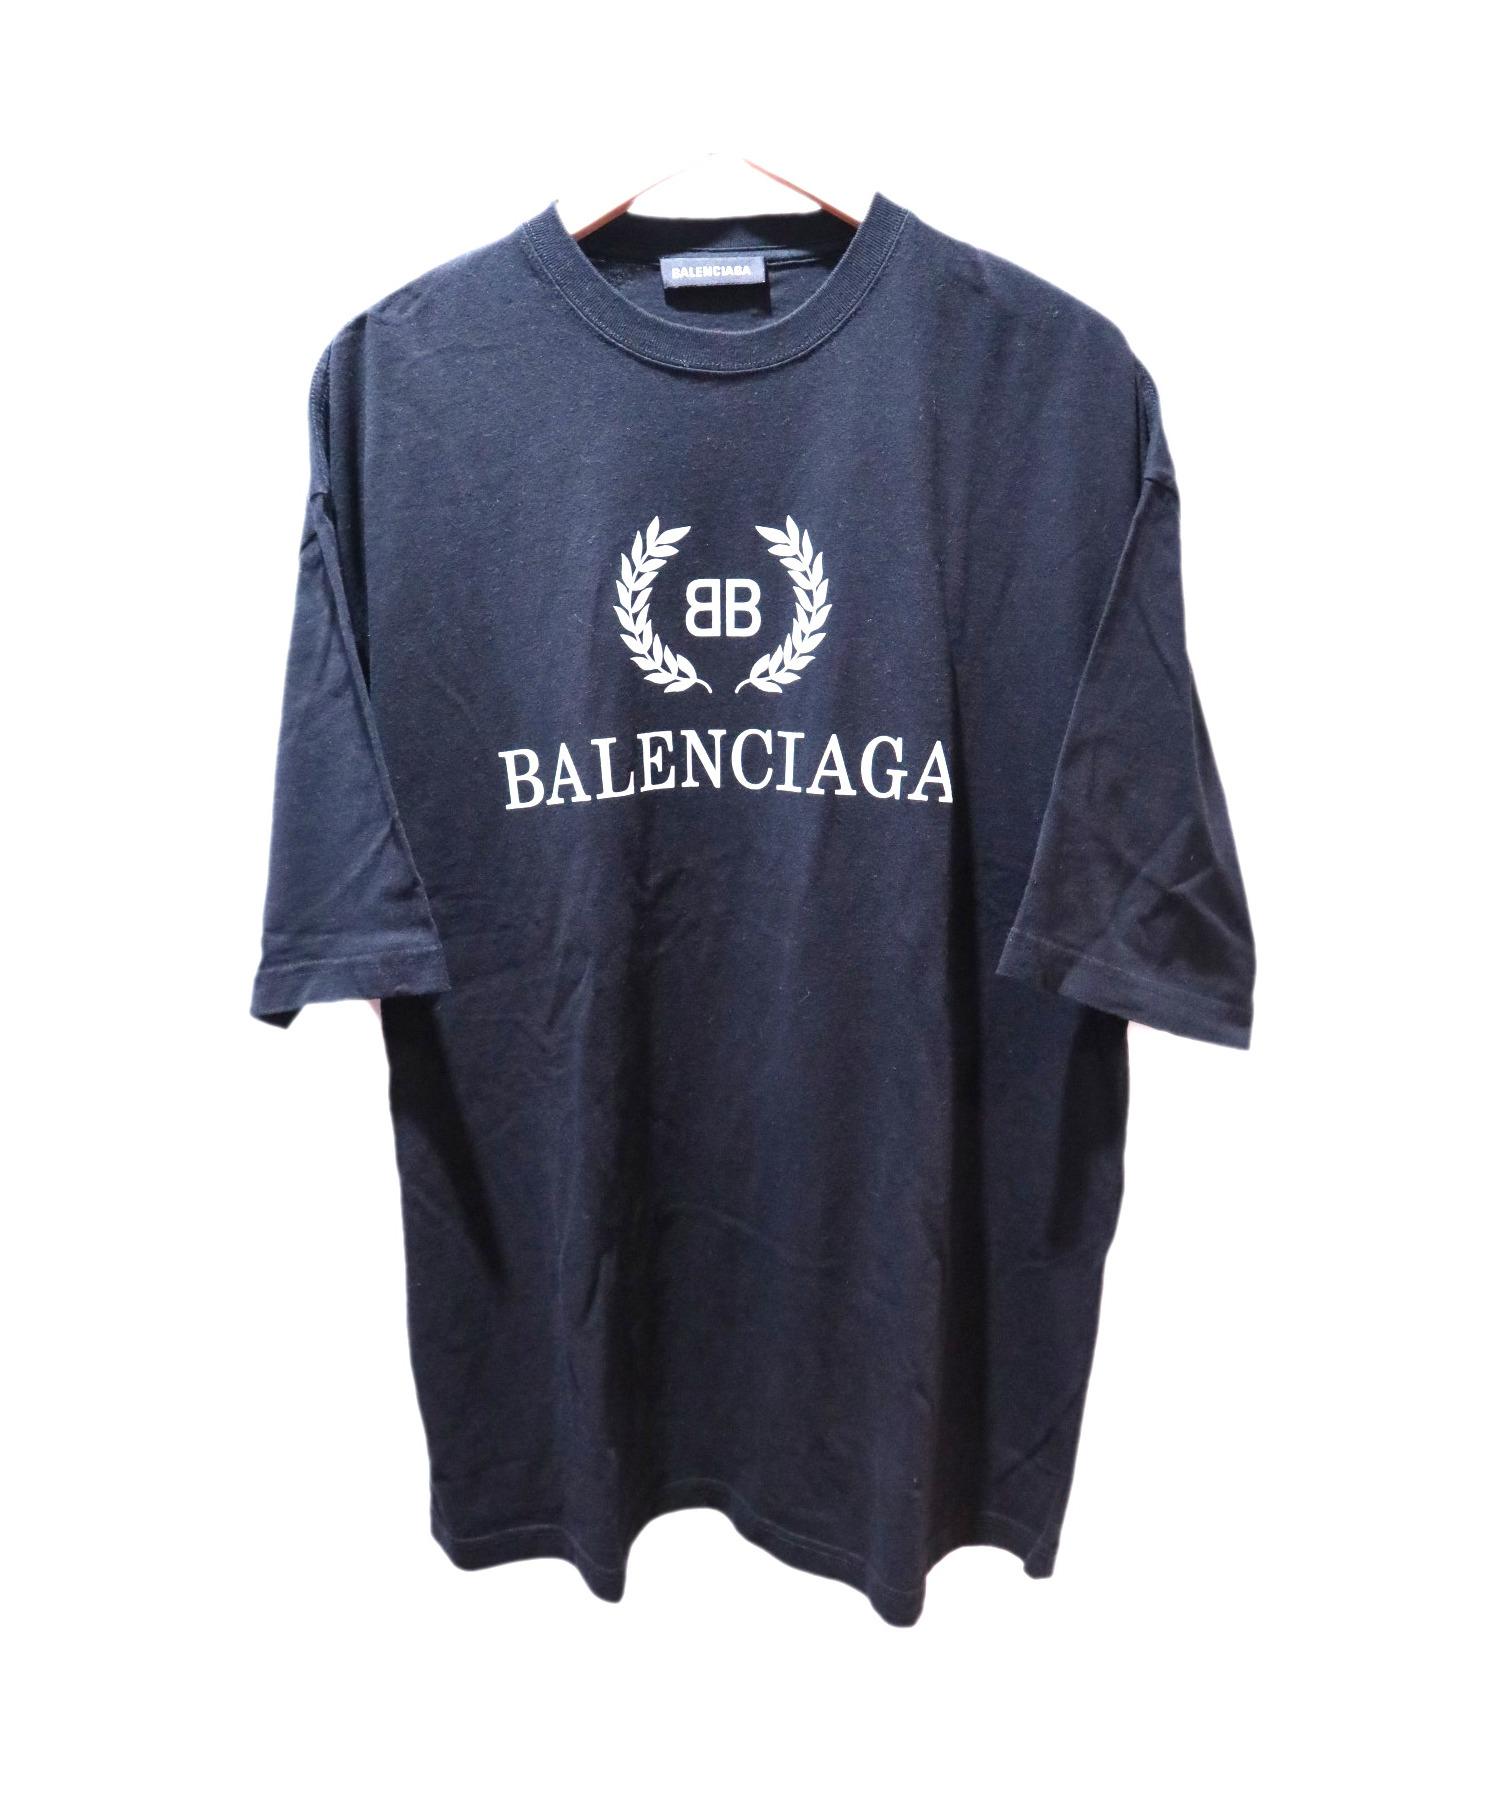 BALENCIAGA (バレンシアガ) BBロゴ プリントTシャツ ブラック サイズ:M 19SS